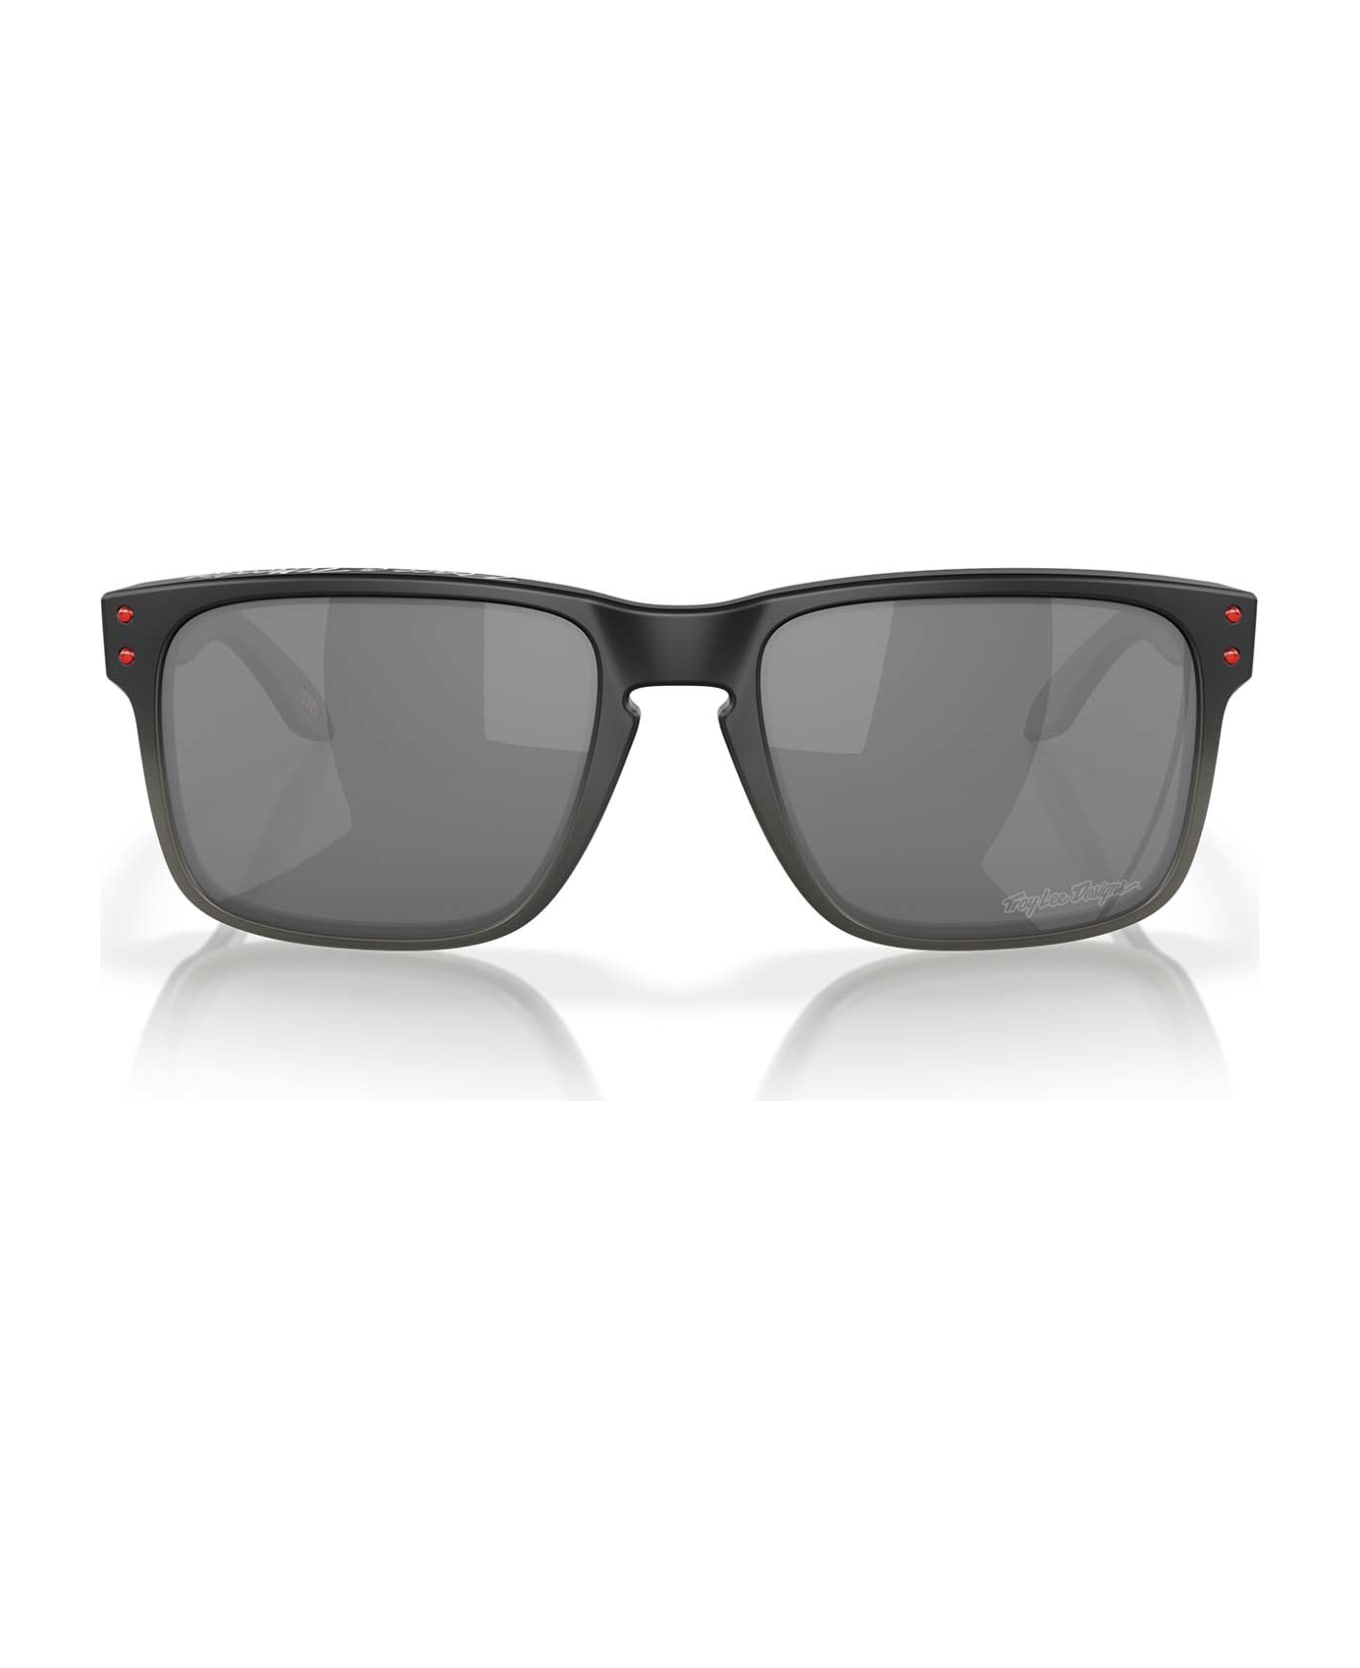 Oakley Oo9102 Troy Lee Designs Black Fade Sunglasses - Troy Lee Designs Black Fade サングラス